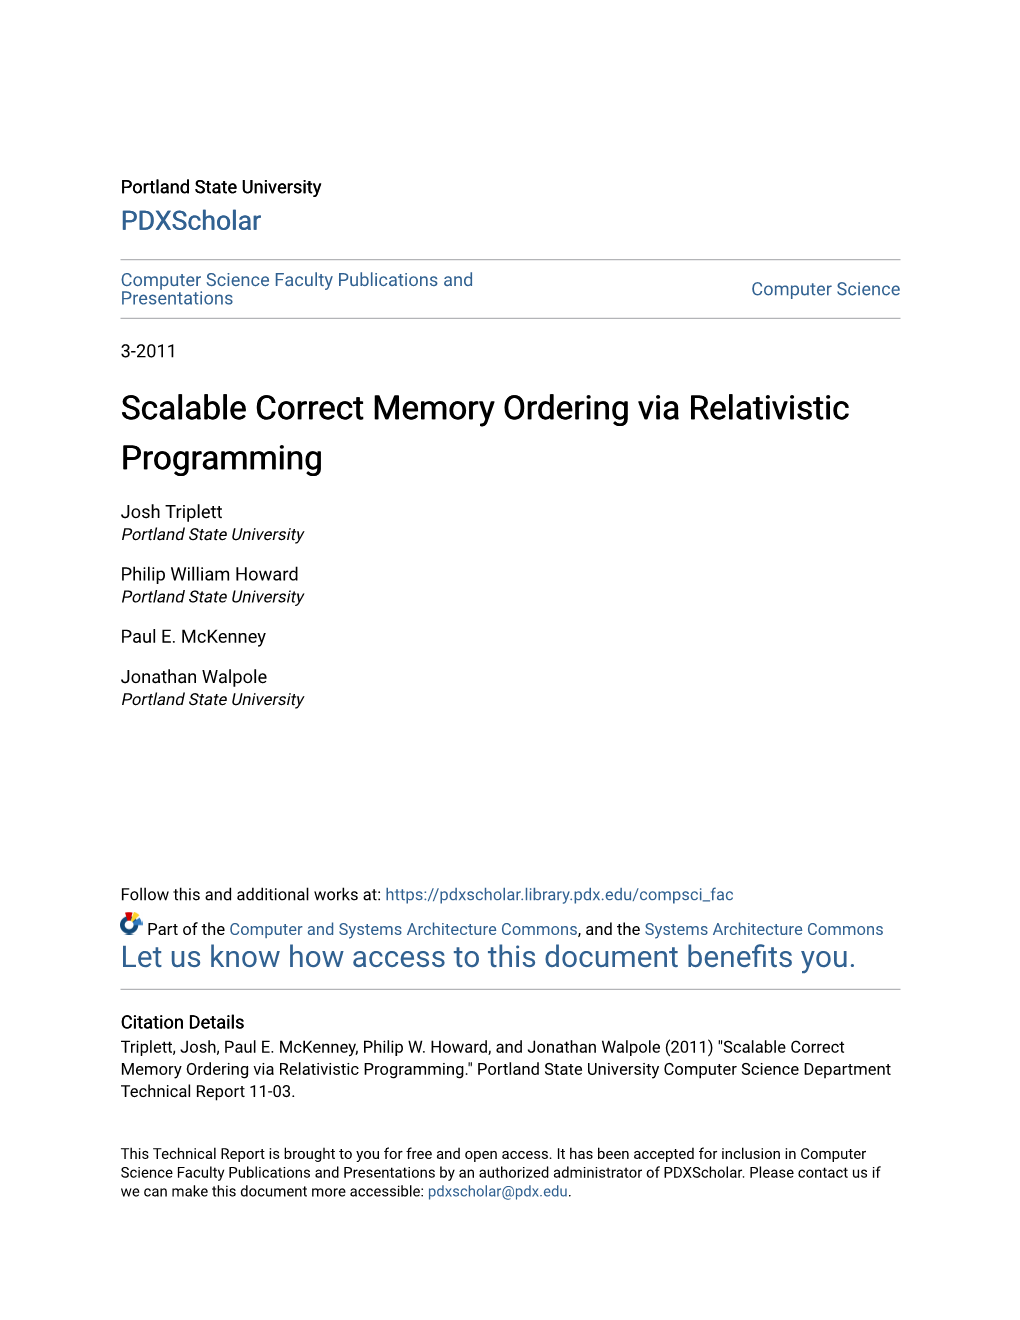 Scalable Correct Memory Ordering Via Relativistic Programming